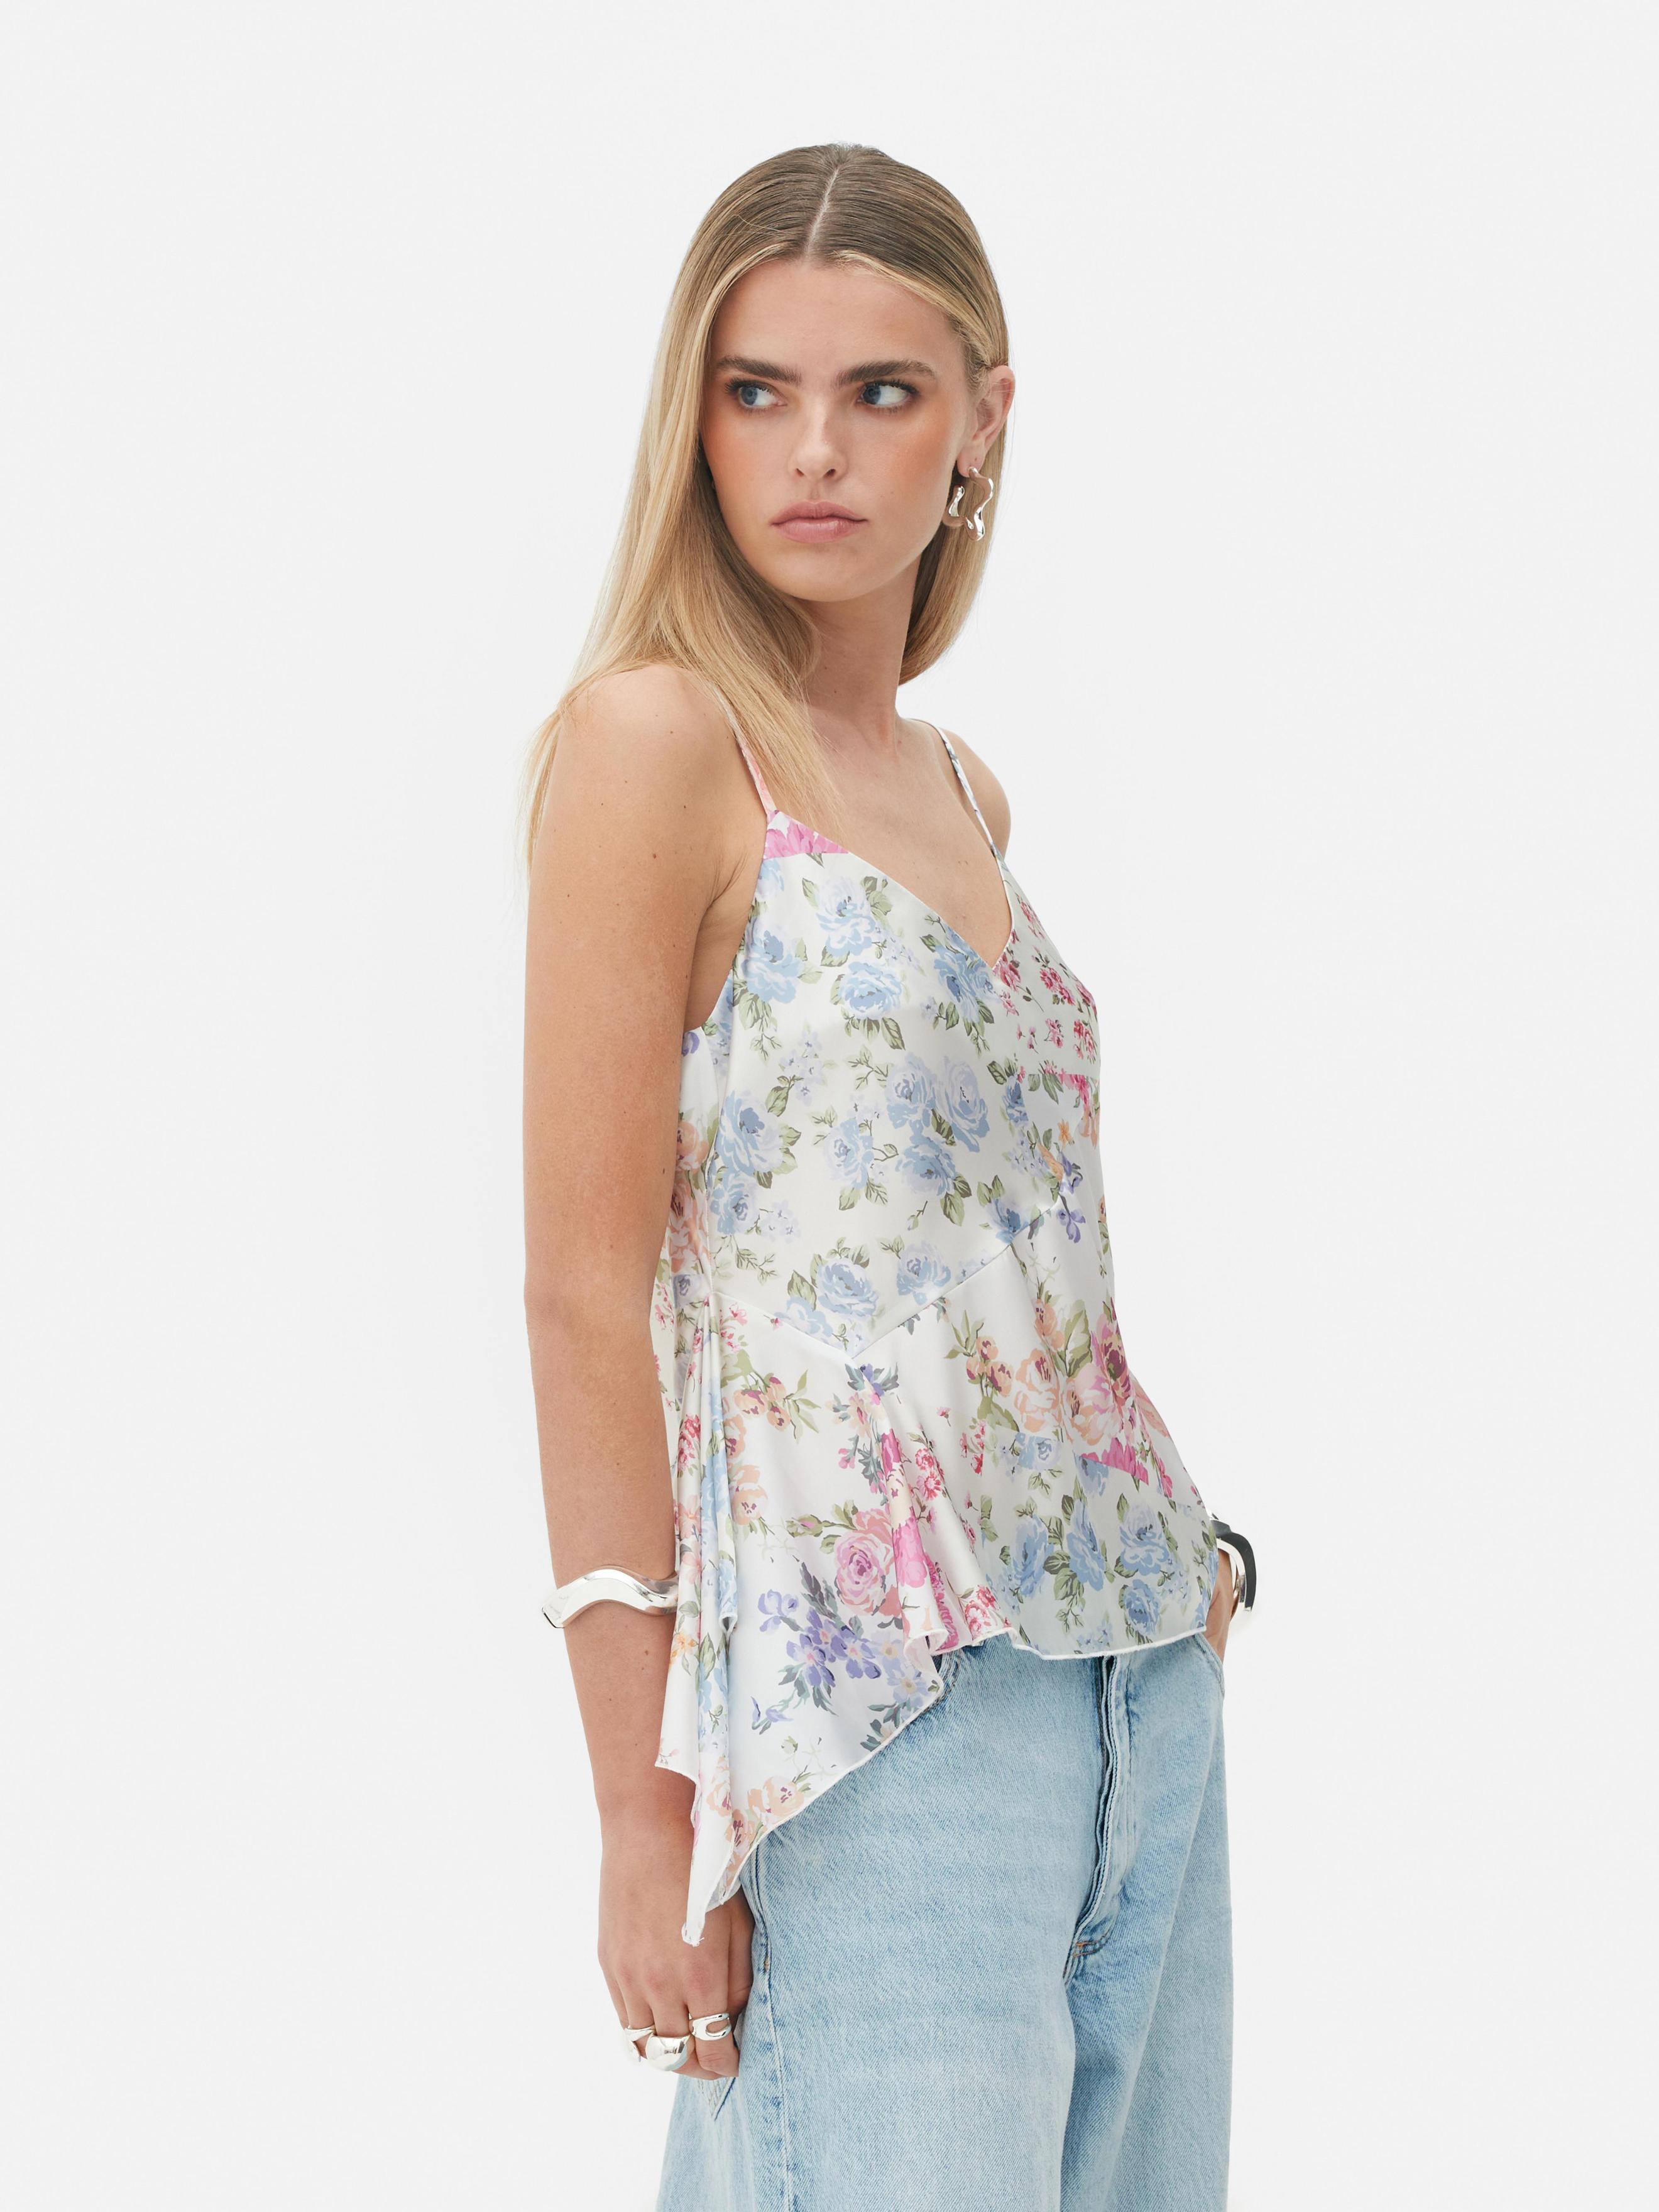 Oferta de Camiseta de tirantes drapeada floral de Rita Ora por 14€ en Primark